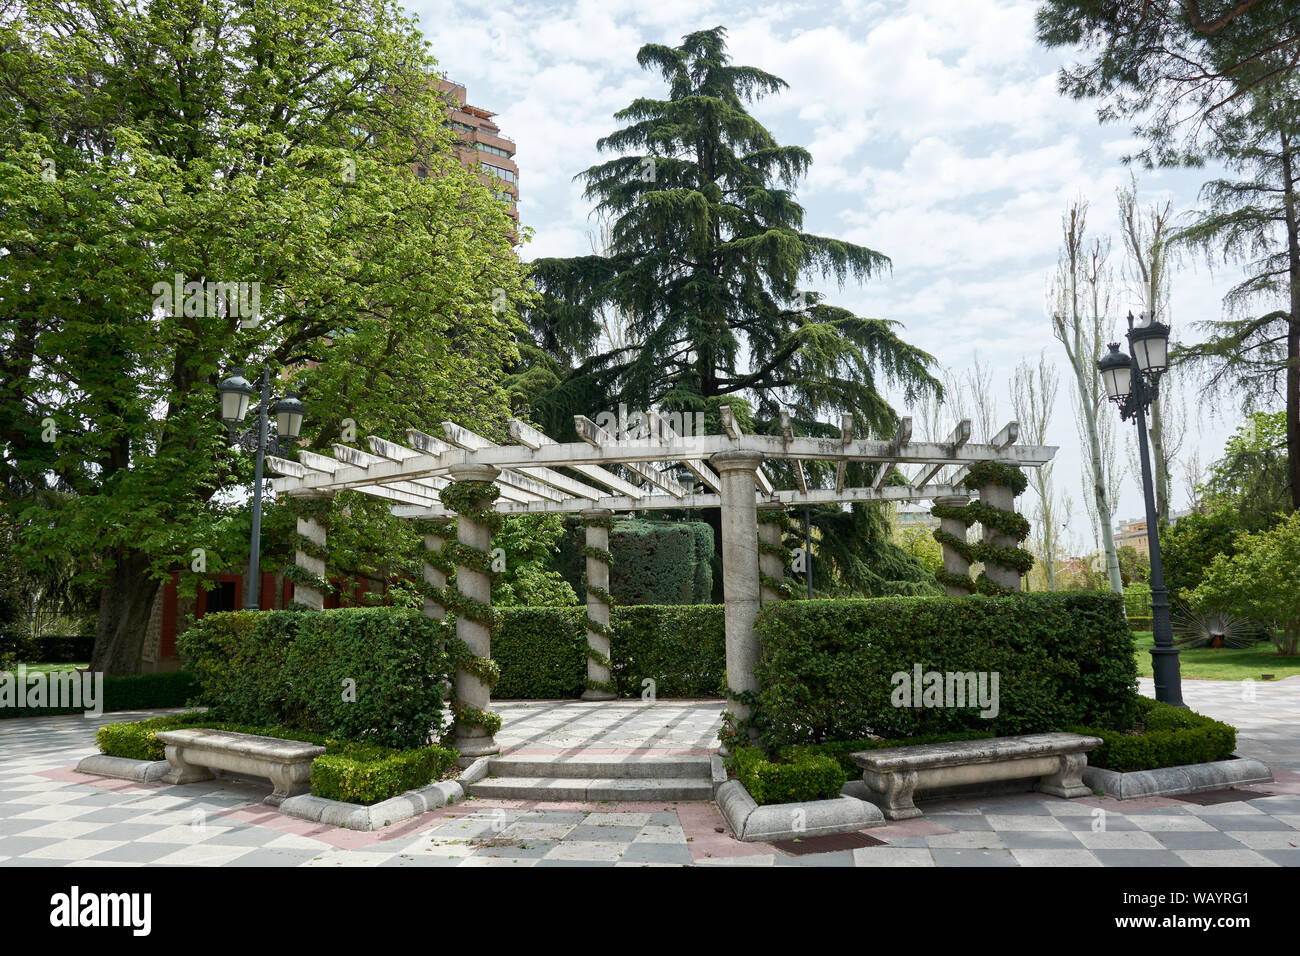 MADRID, SPAIN - APRIL 23, 2018: Old pergola in the Gardens of Cecilio Rodriguez, located inside the Retiro Park in Madrid, Spain. Stock Photo